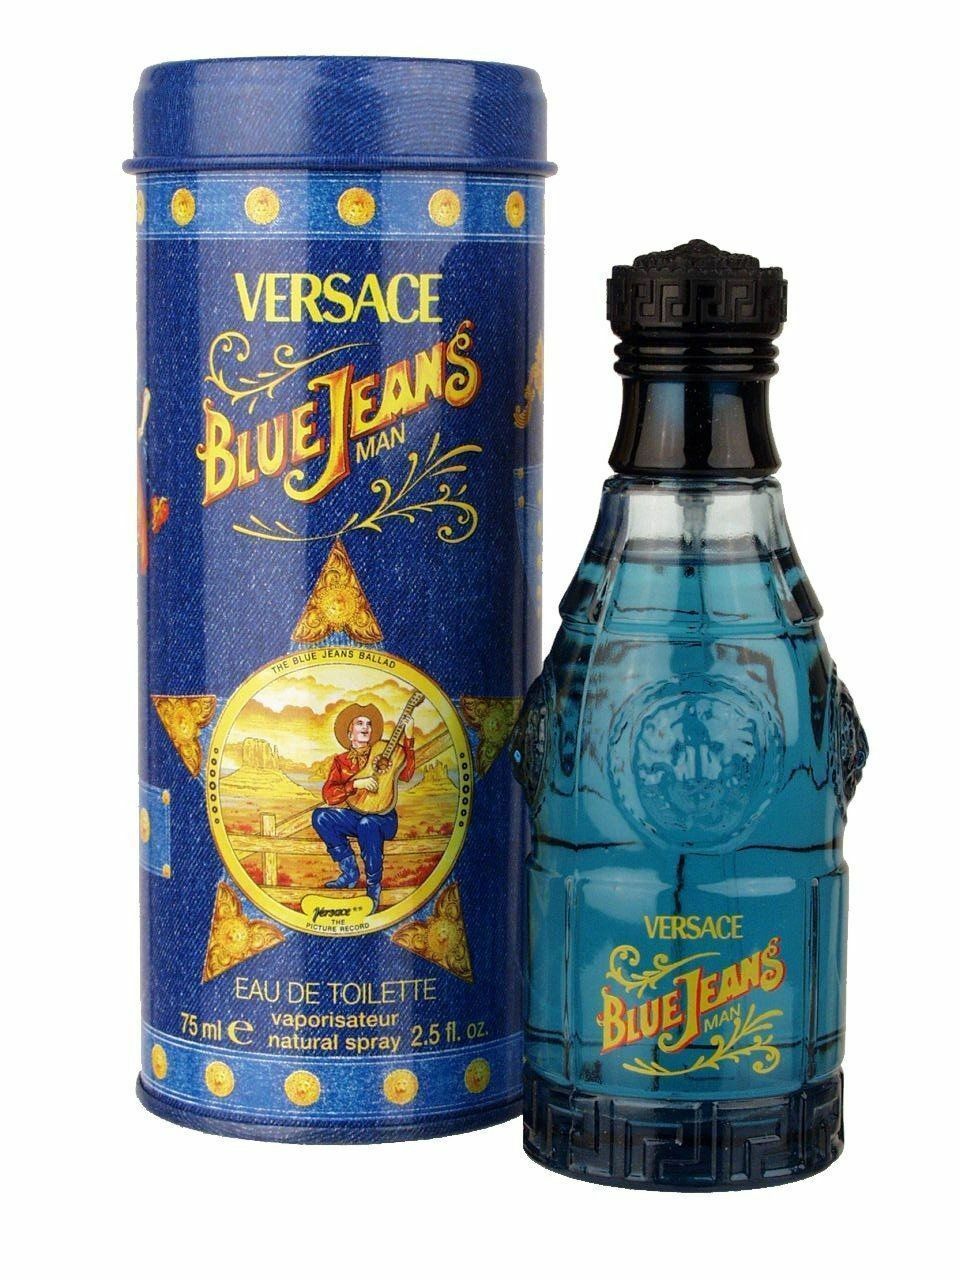 Versace BLUE JEANS Man EDT Eau de Toilette Spray 2.5 oz / 75 ml * NEW IN CAN * - Perfume Gallery